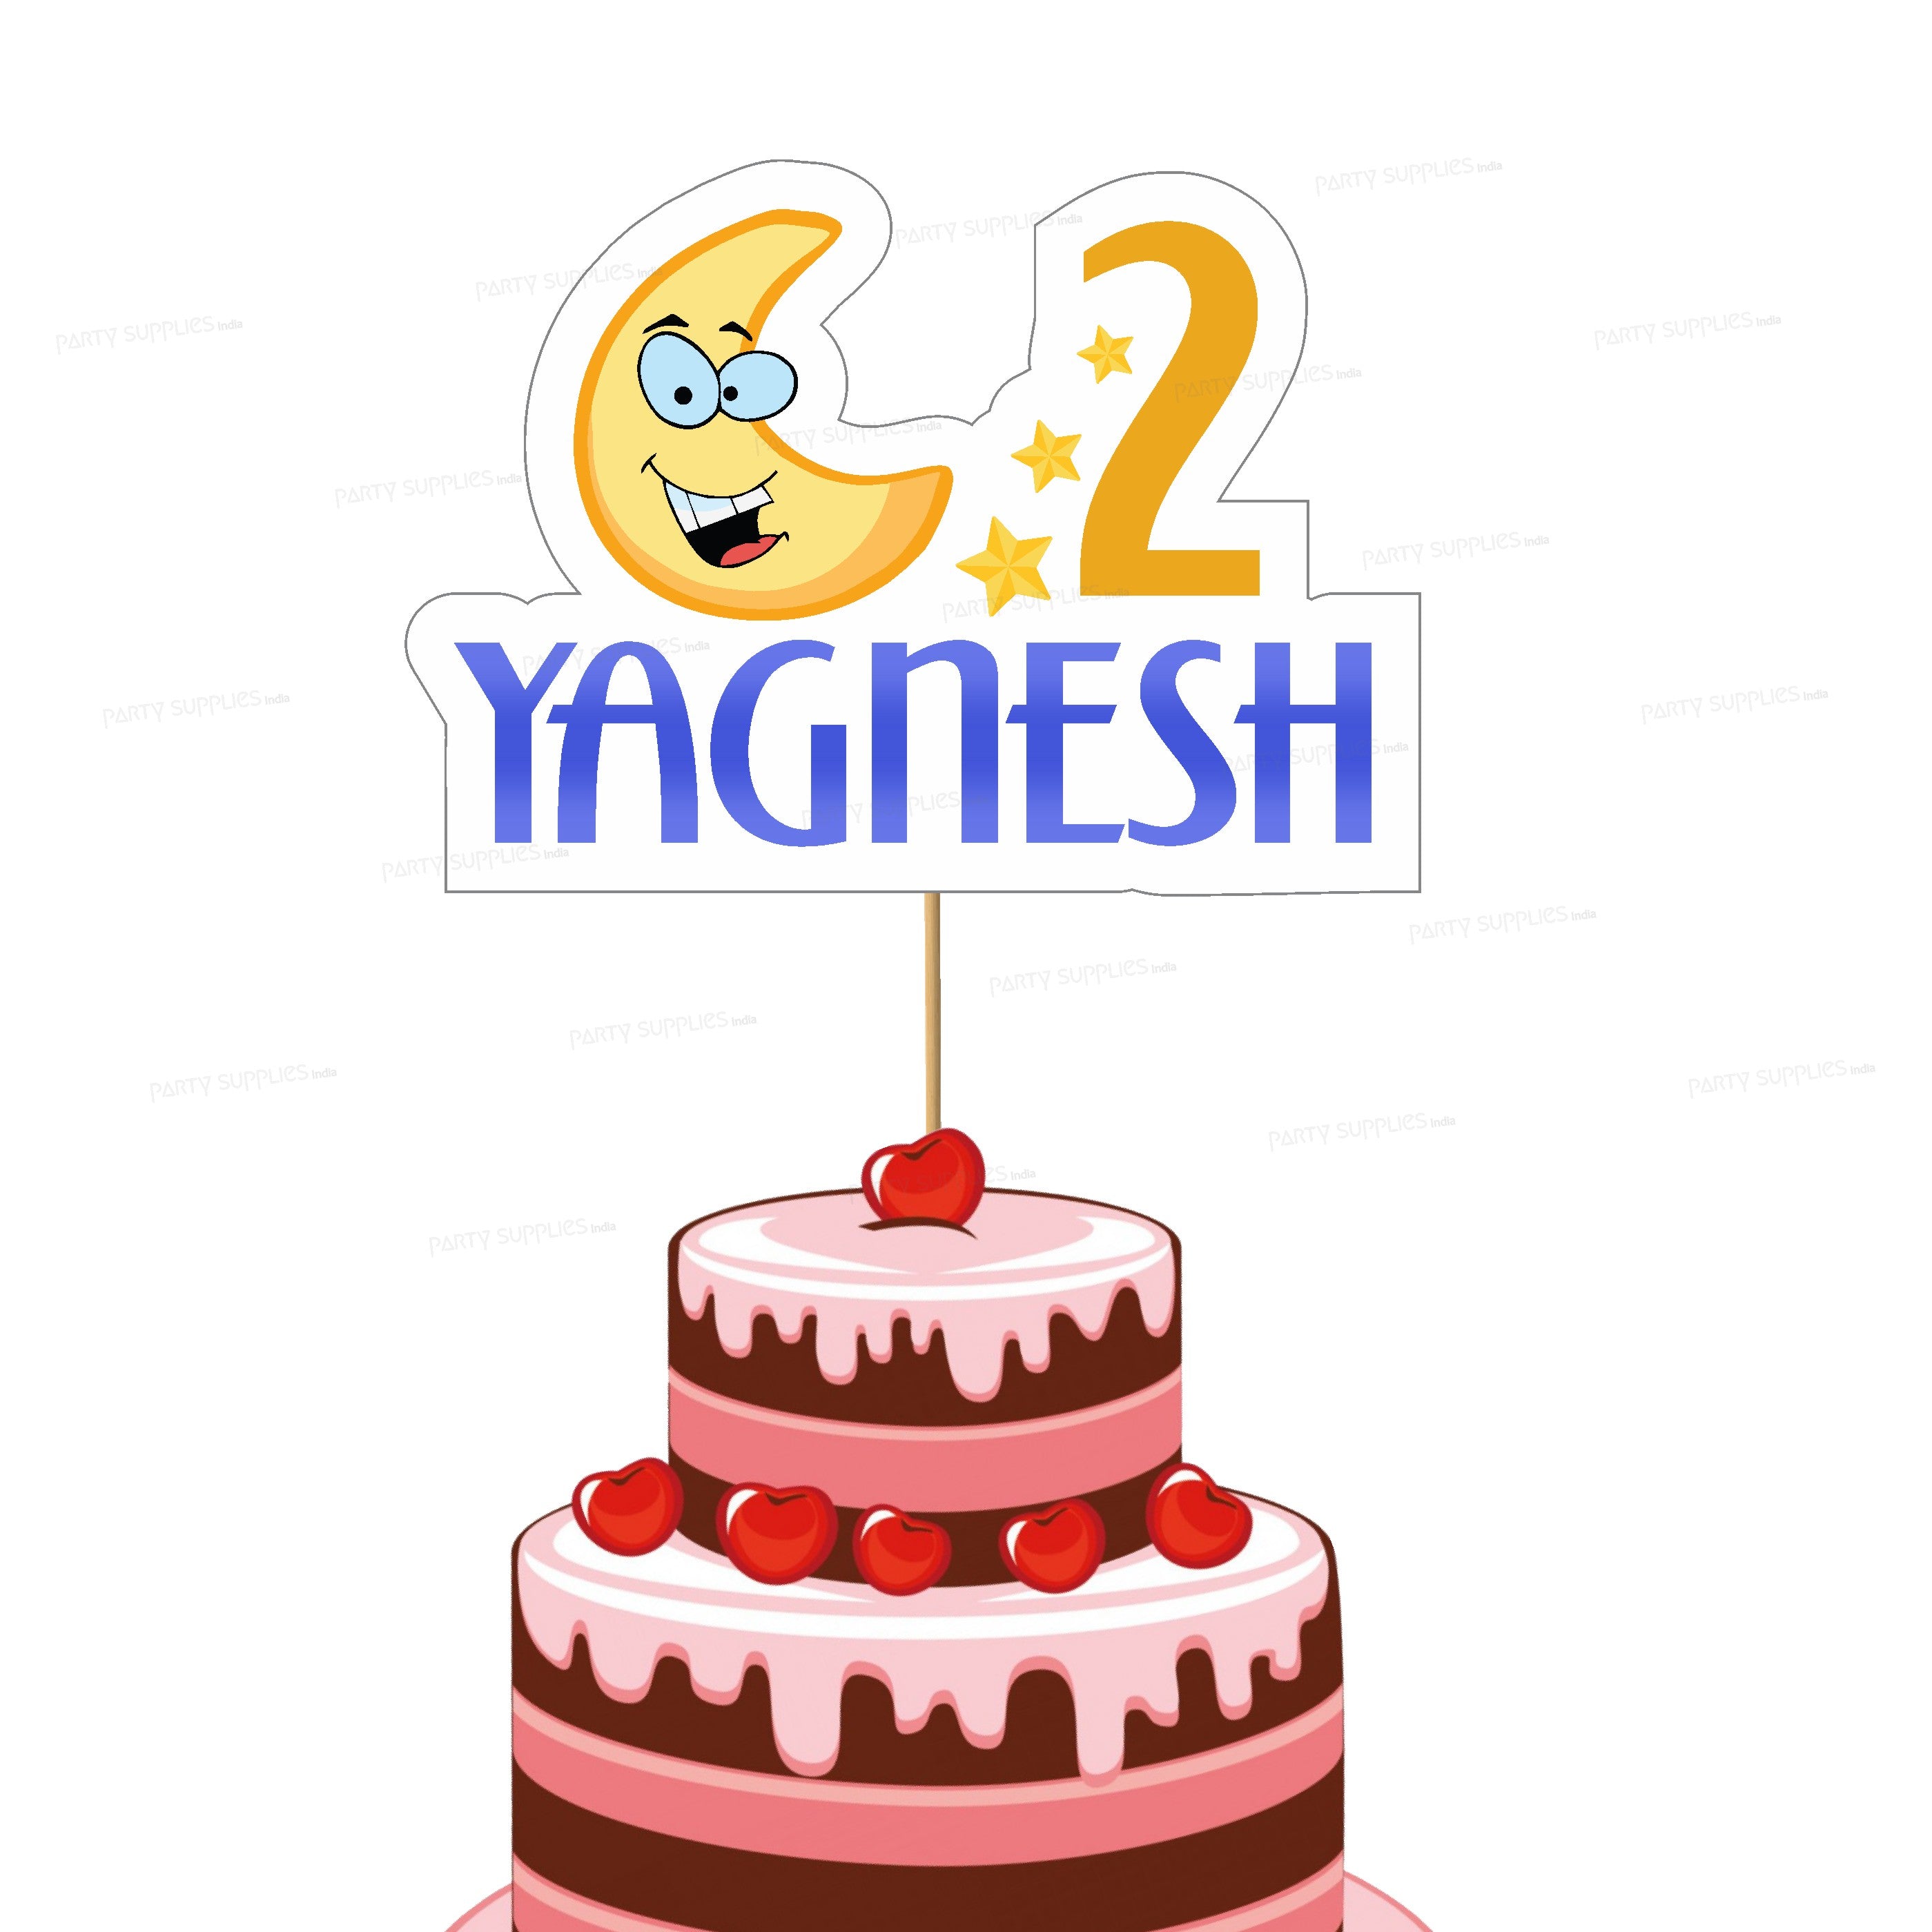 Happy Birthday Reyansh Image Wishes✓ - YouTube